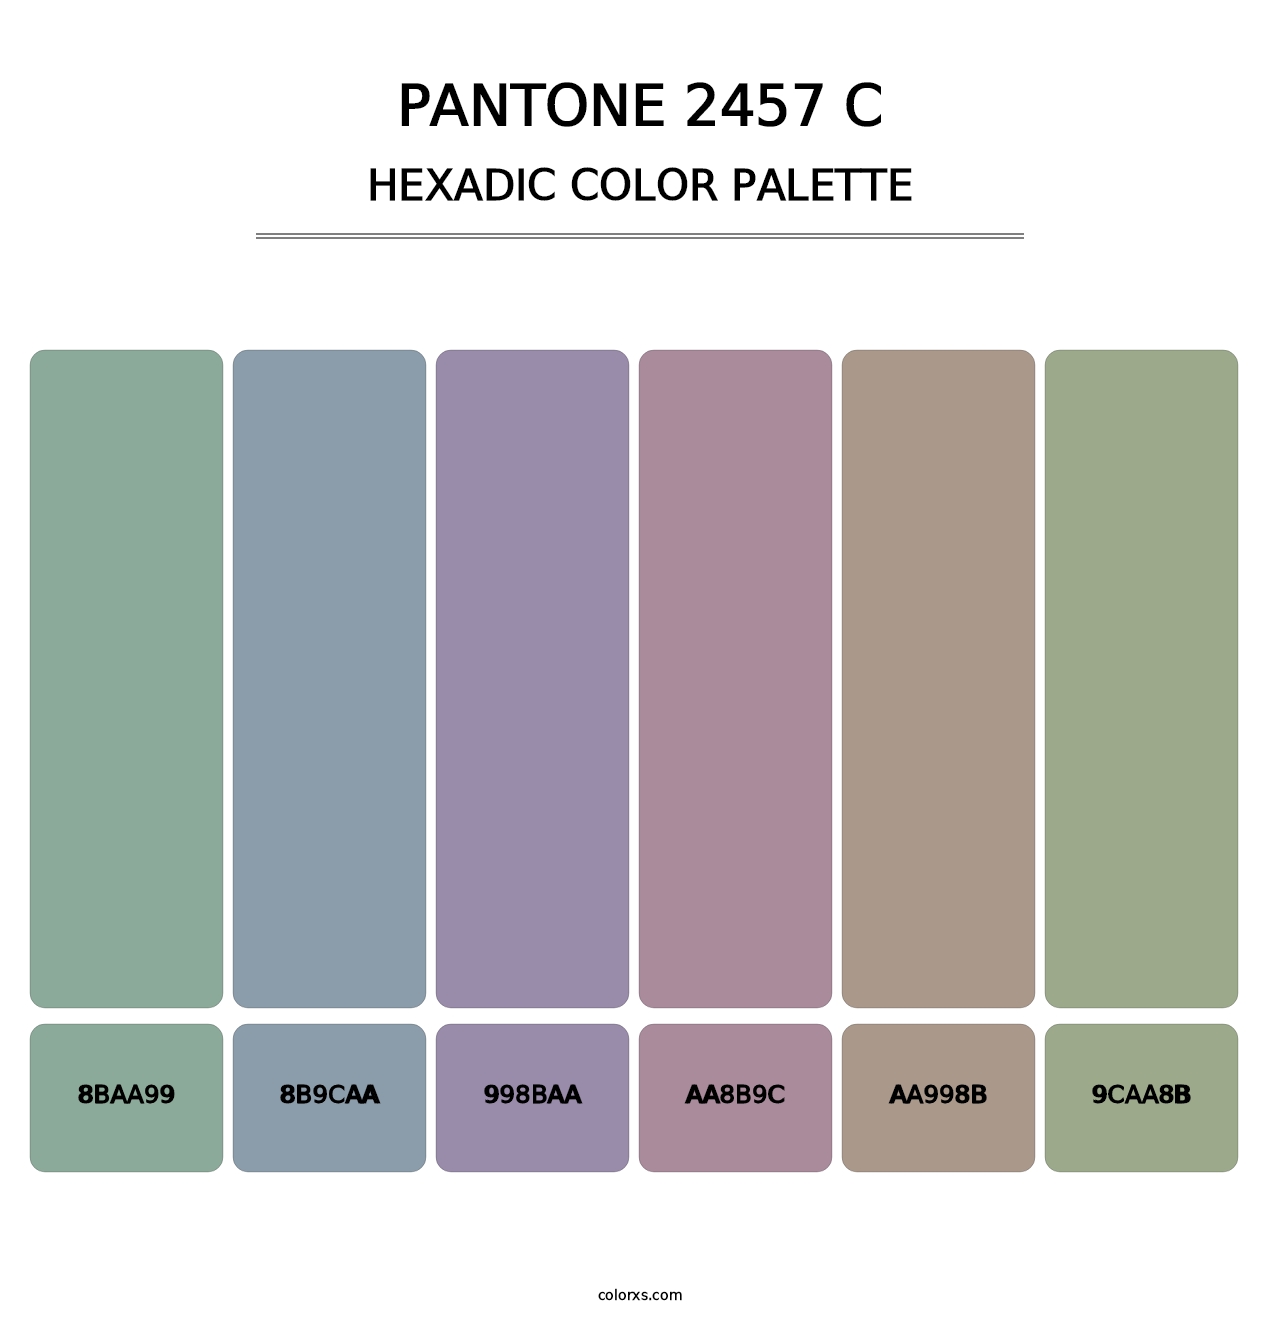 PANTONE 2457 C - Hexadic Color Palette